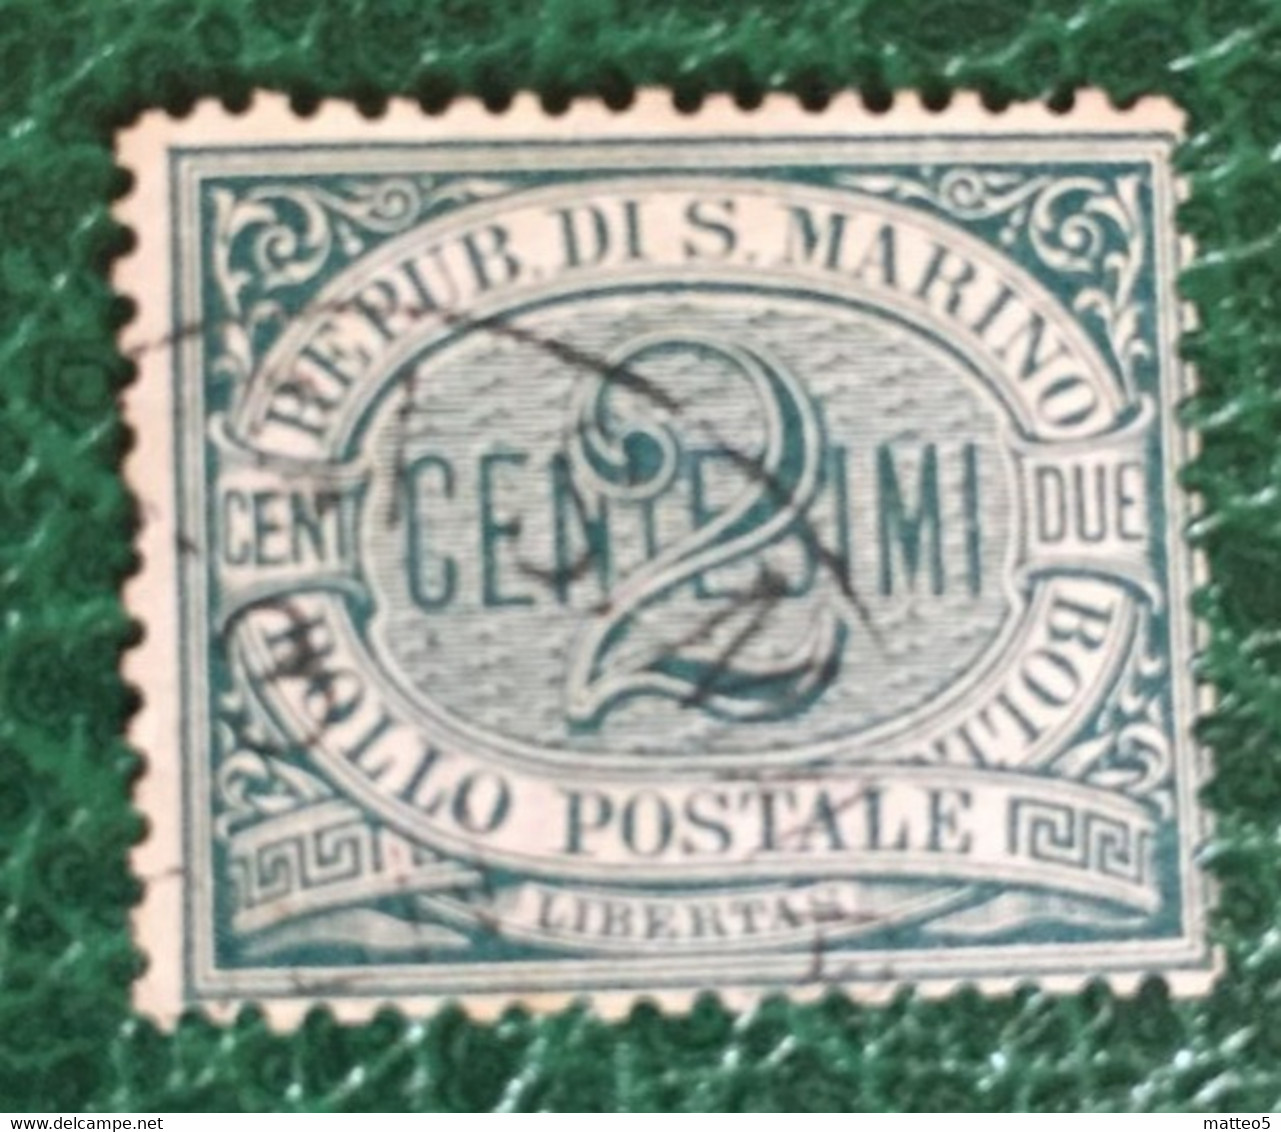 1877-90 - San Marino - Due Centesimi Usato - Gebraucht